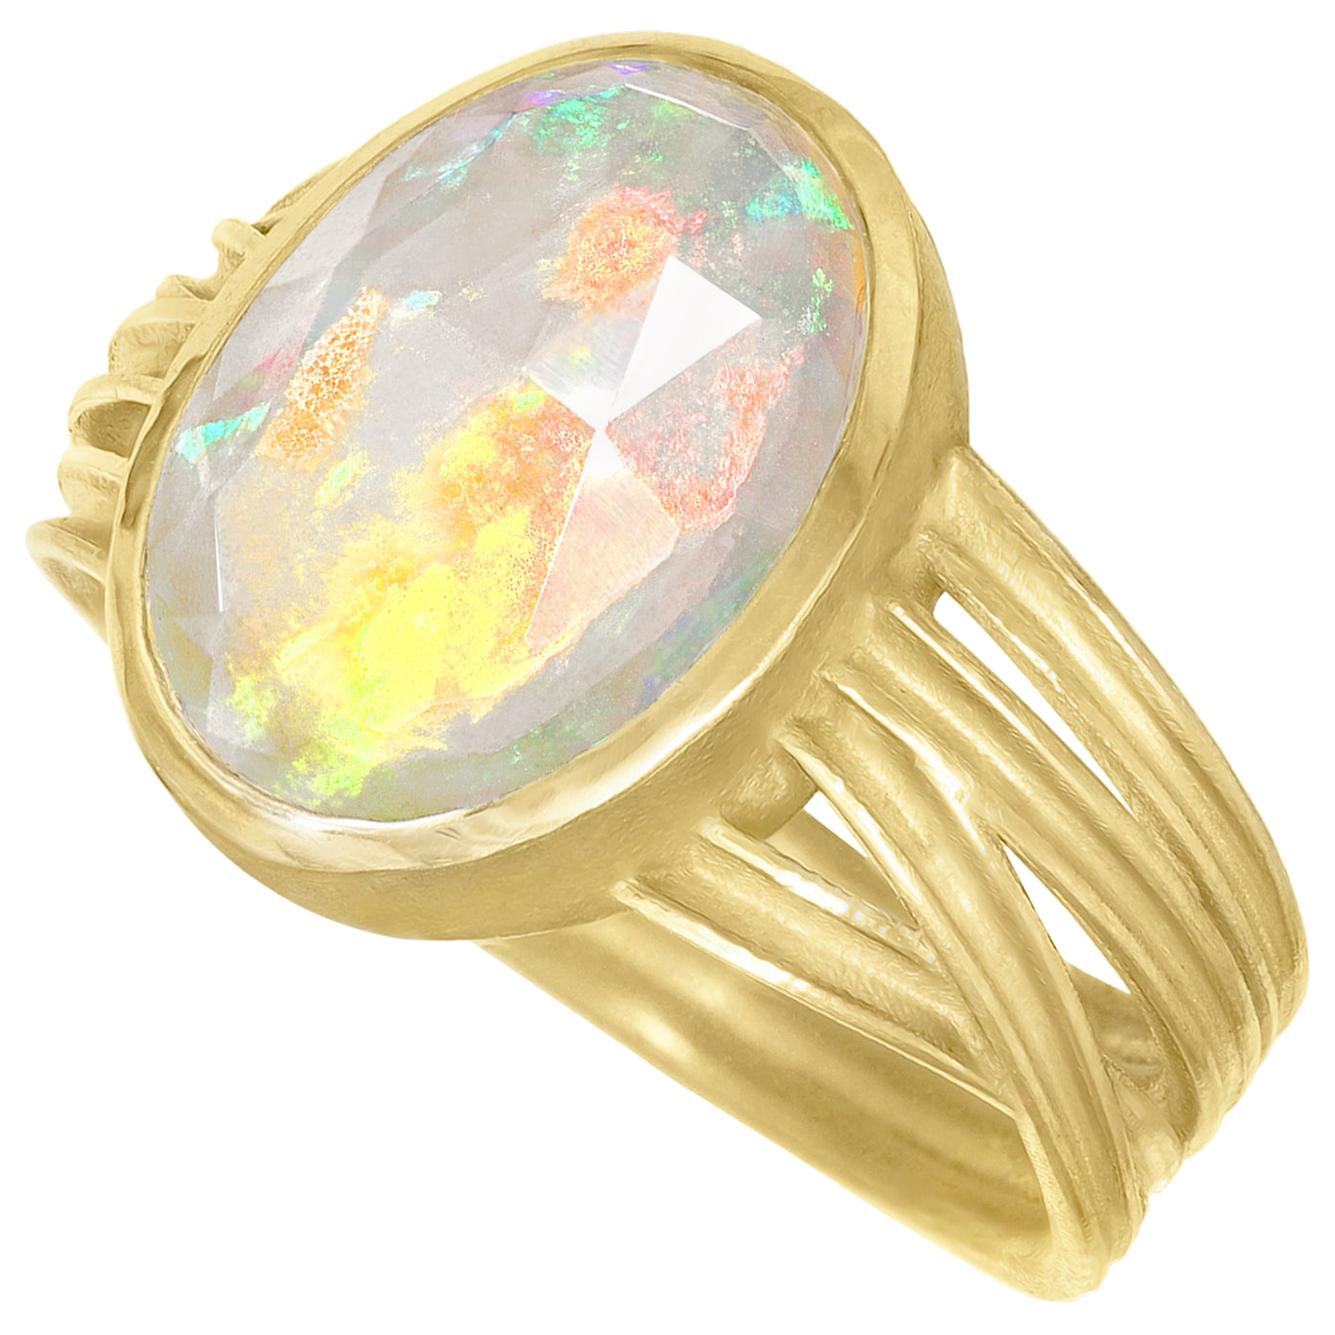 Barbara Heinrich Fiery Faceted Ethiopian Opal Multiwrap Gold Ring